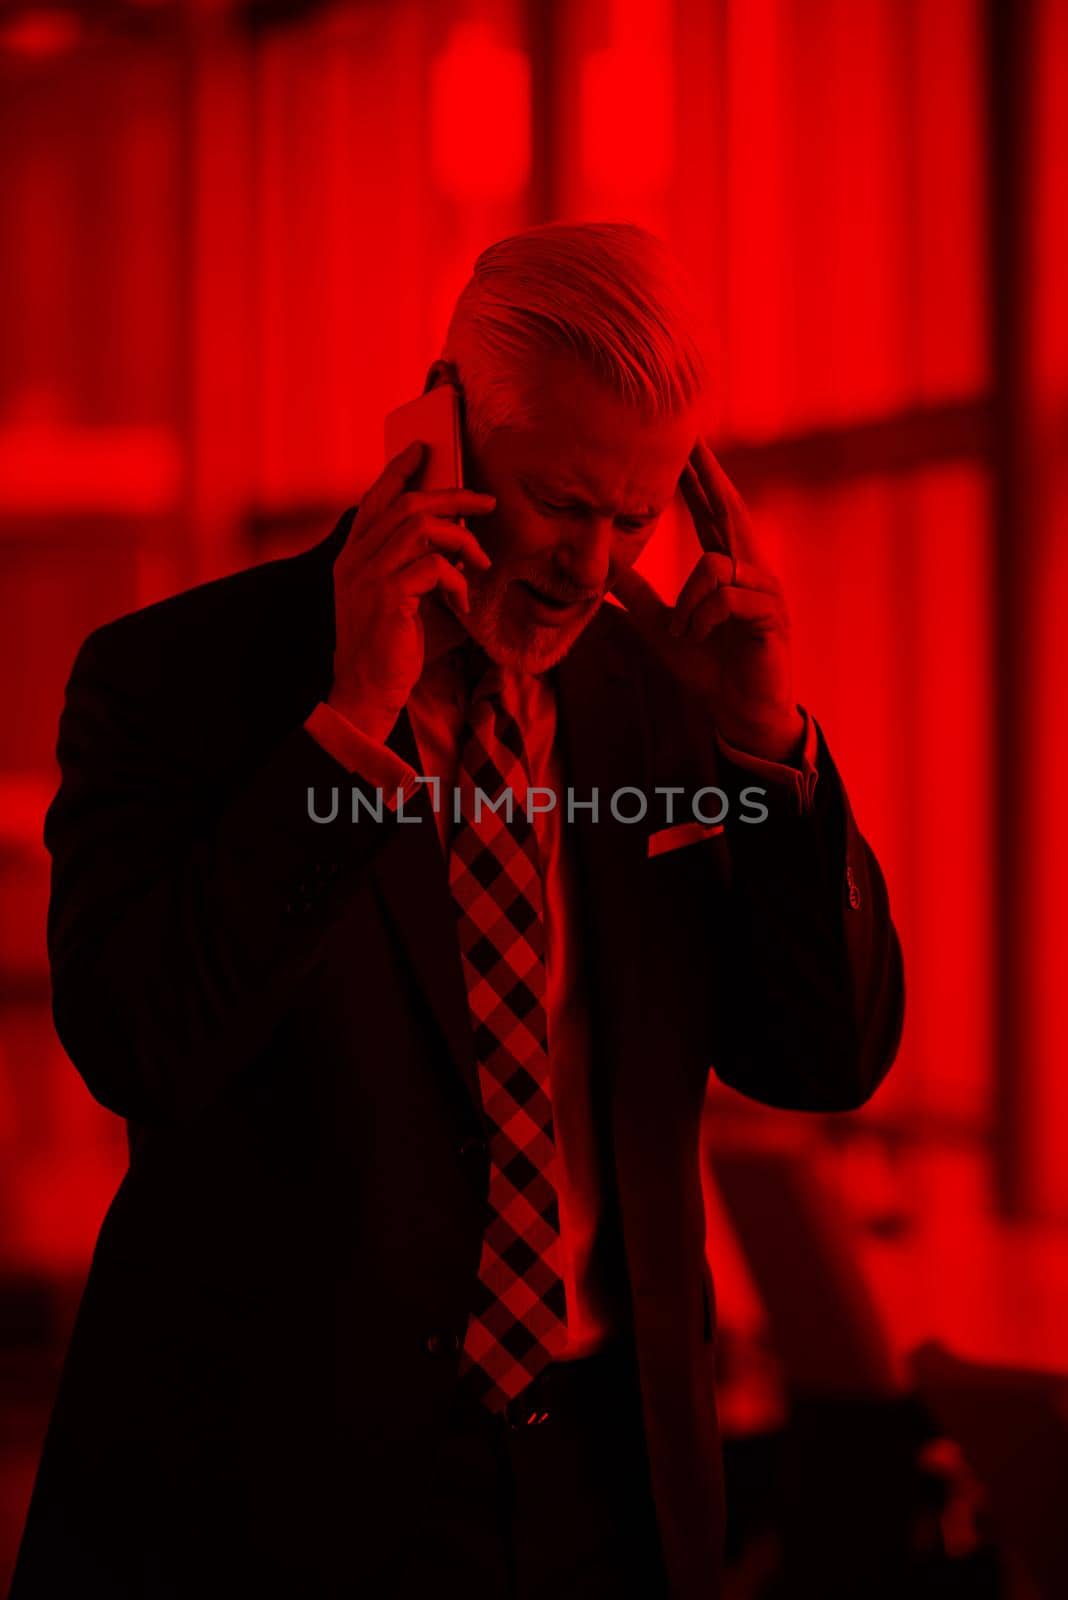 senior business man talk on mobile phone by dotshock